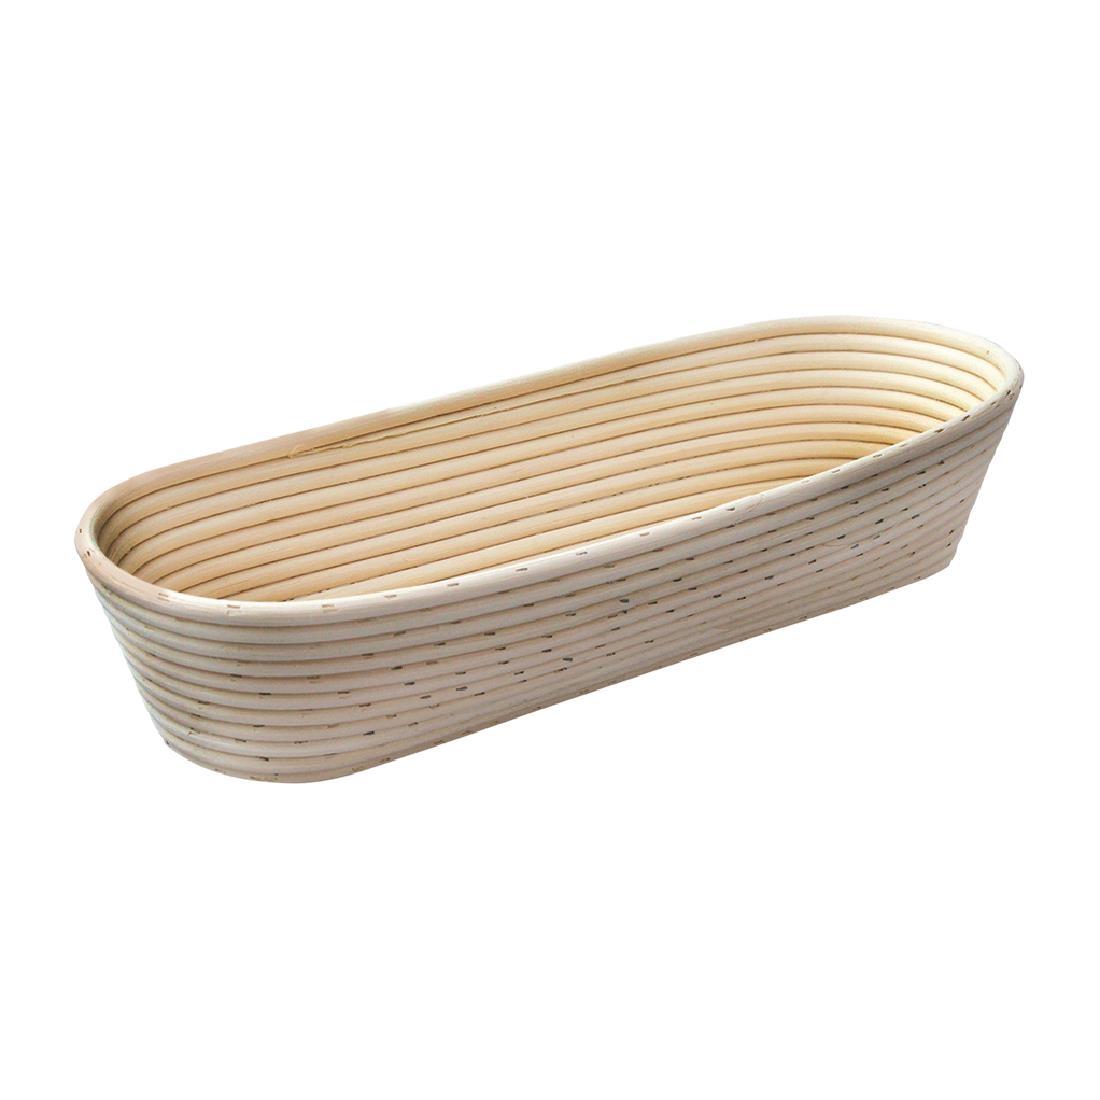 Schneider Oval Bread Proving Basket Long 1500g - DW279  - 1